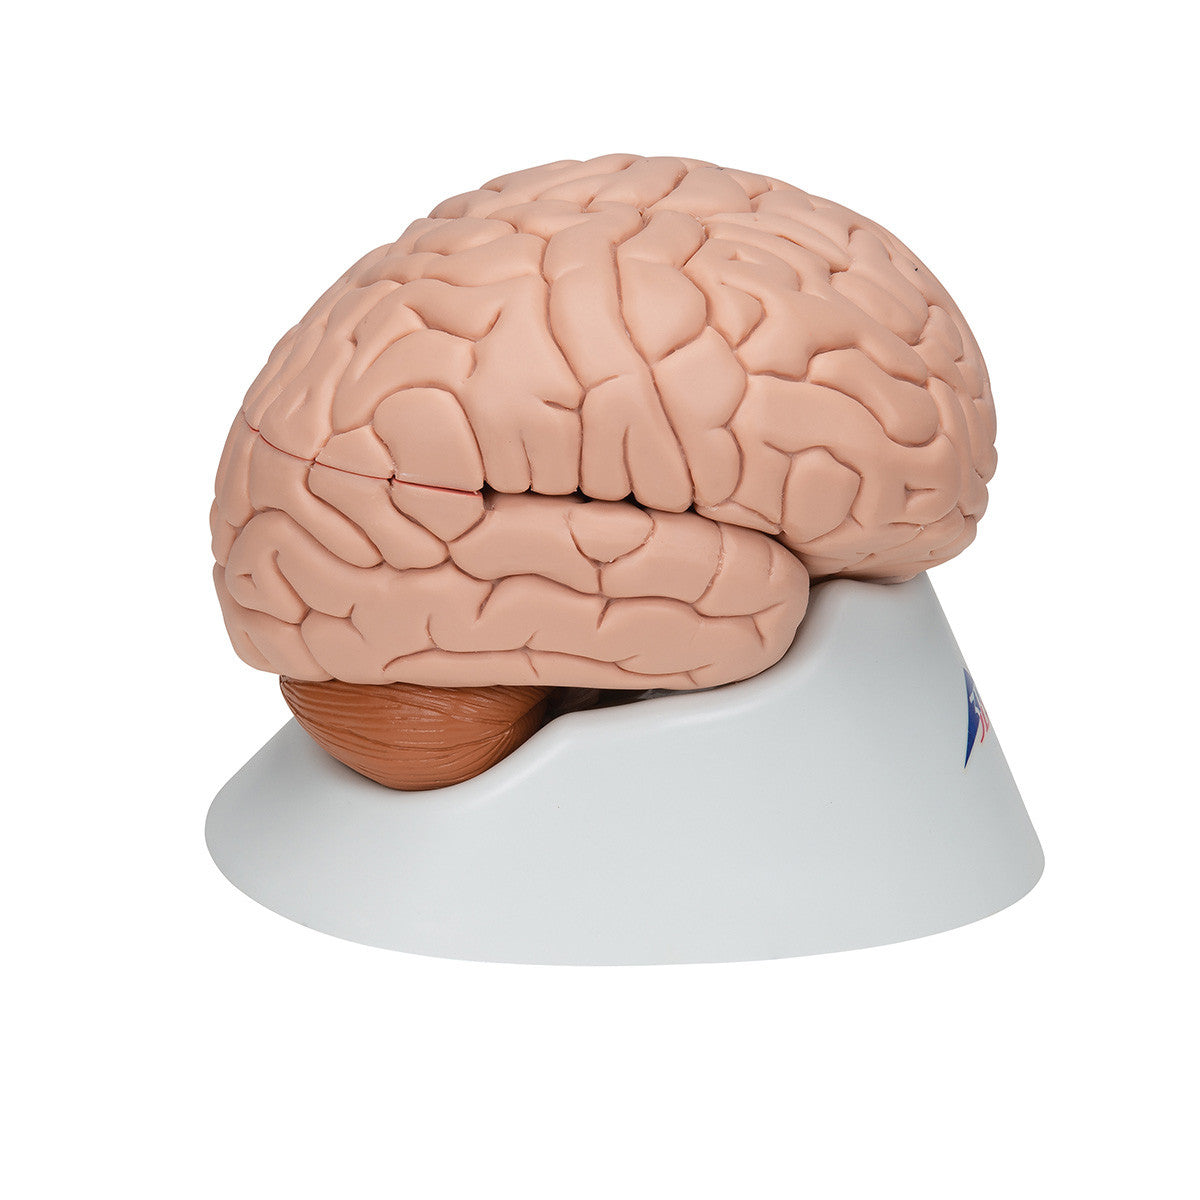 c17_03_1200_1200_human-brain-model-8-part-3b-smart-anatomy__18946.1589753205.1280.1280.jpg